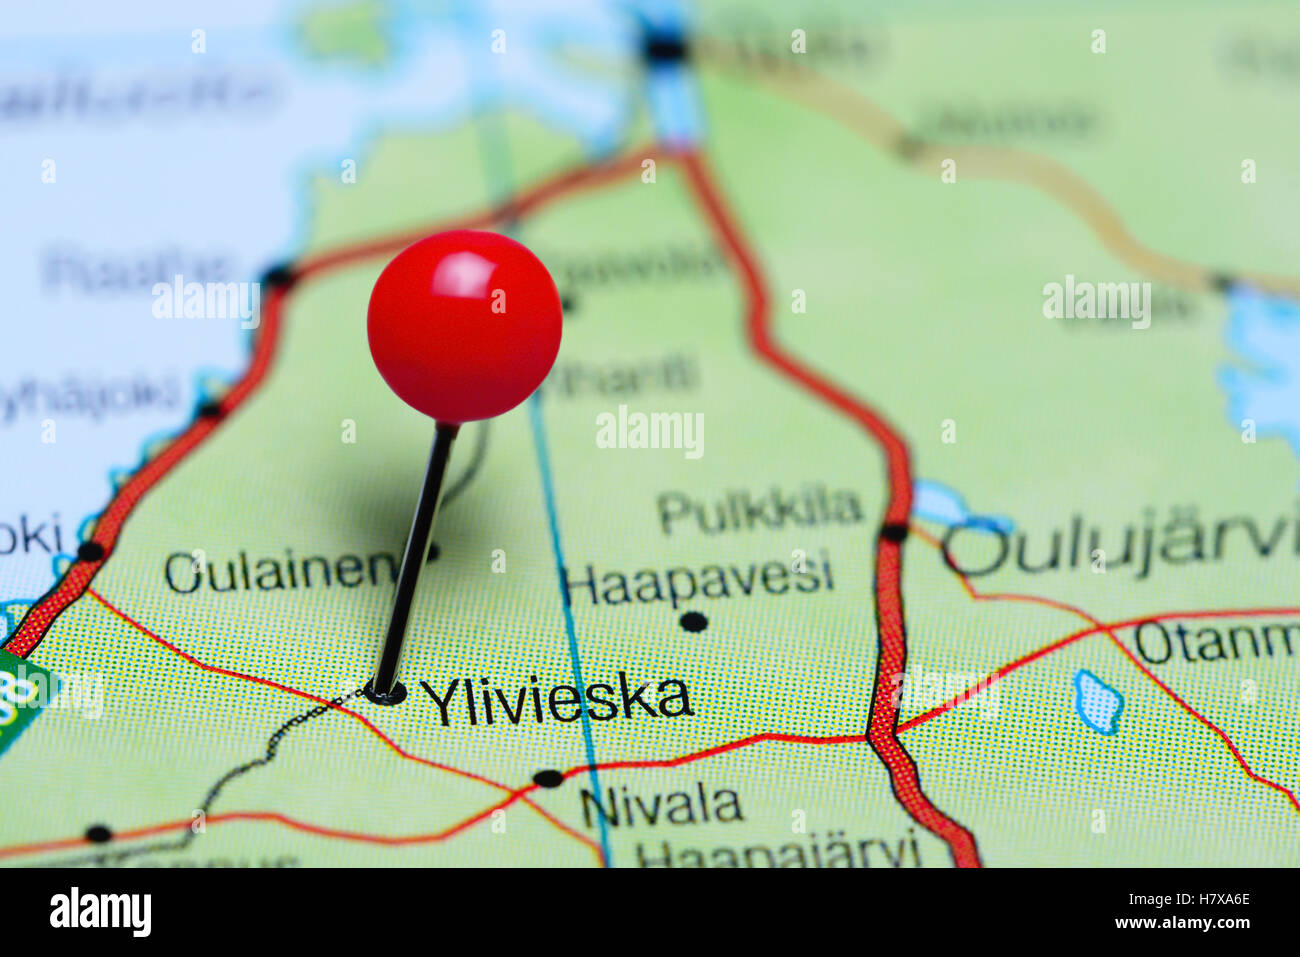 Ylivieska pinned on a map of Finland Stock Photo